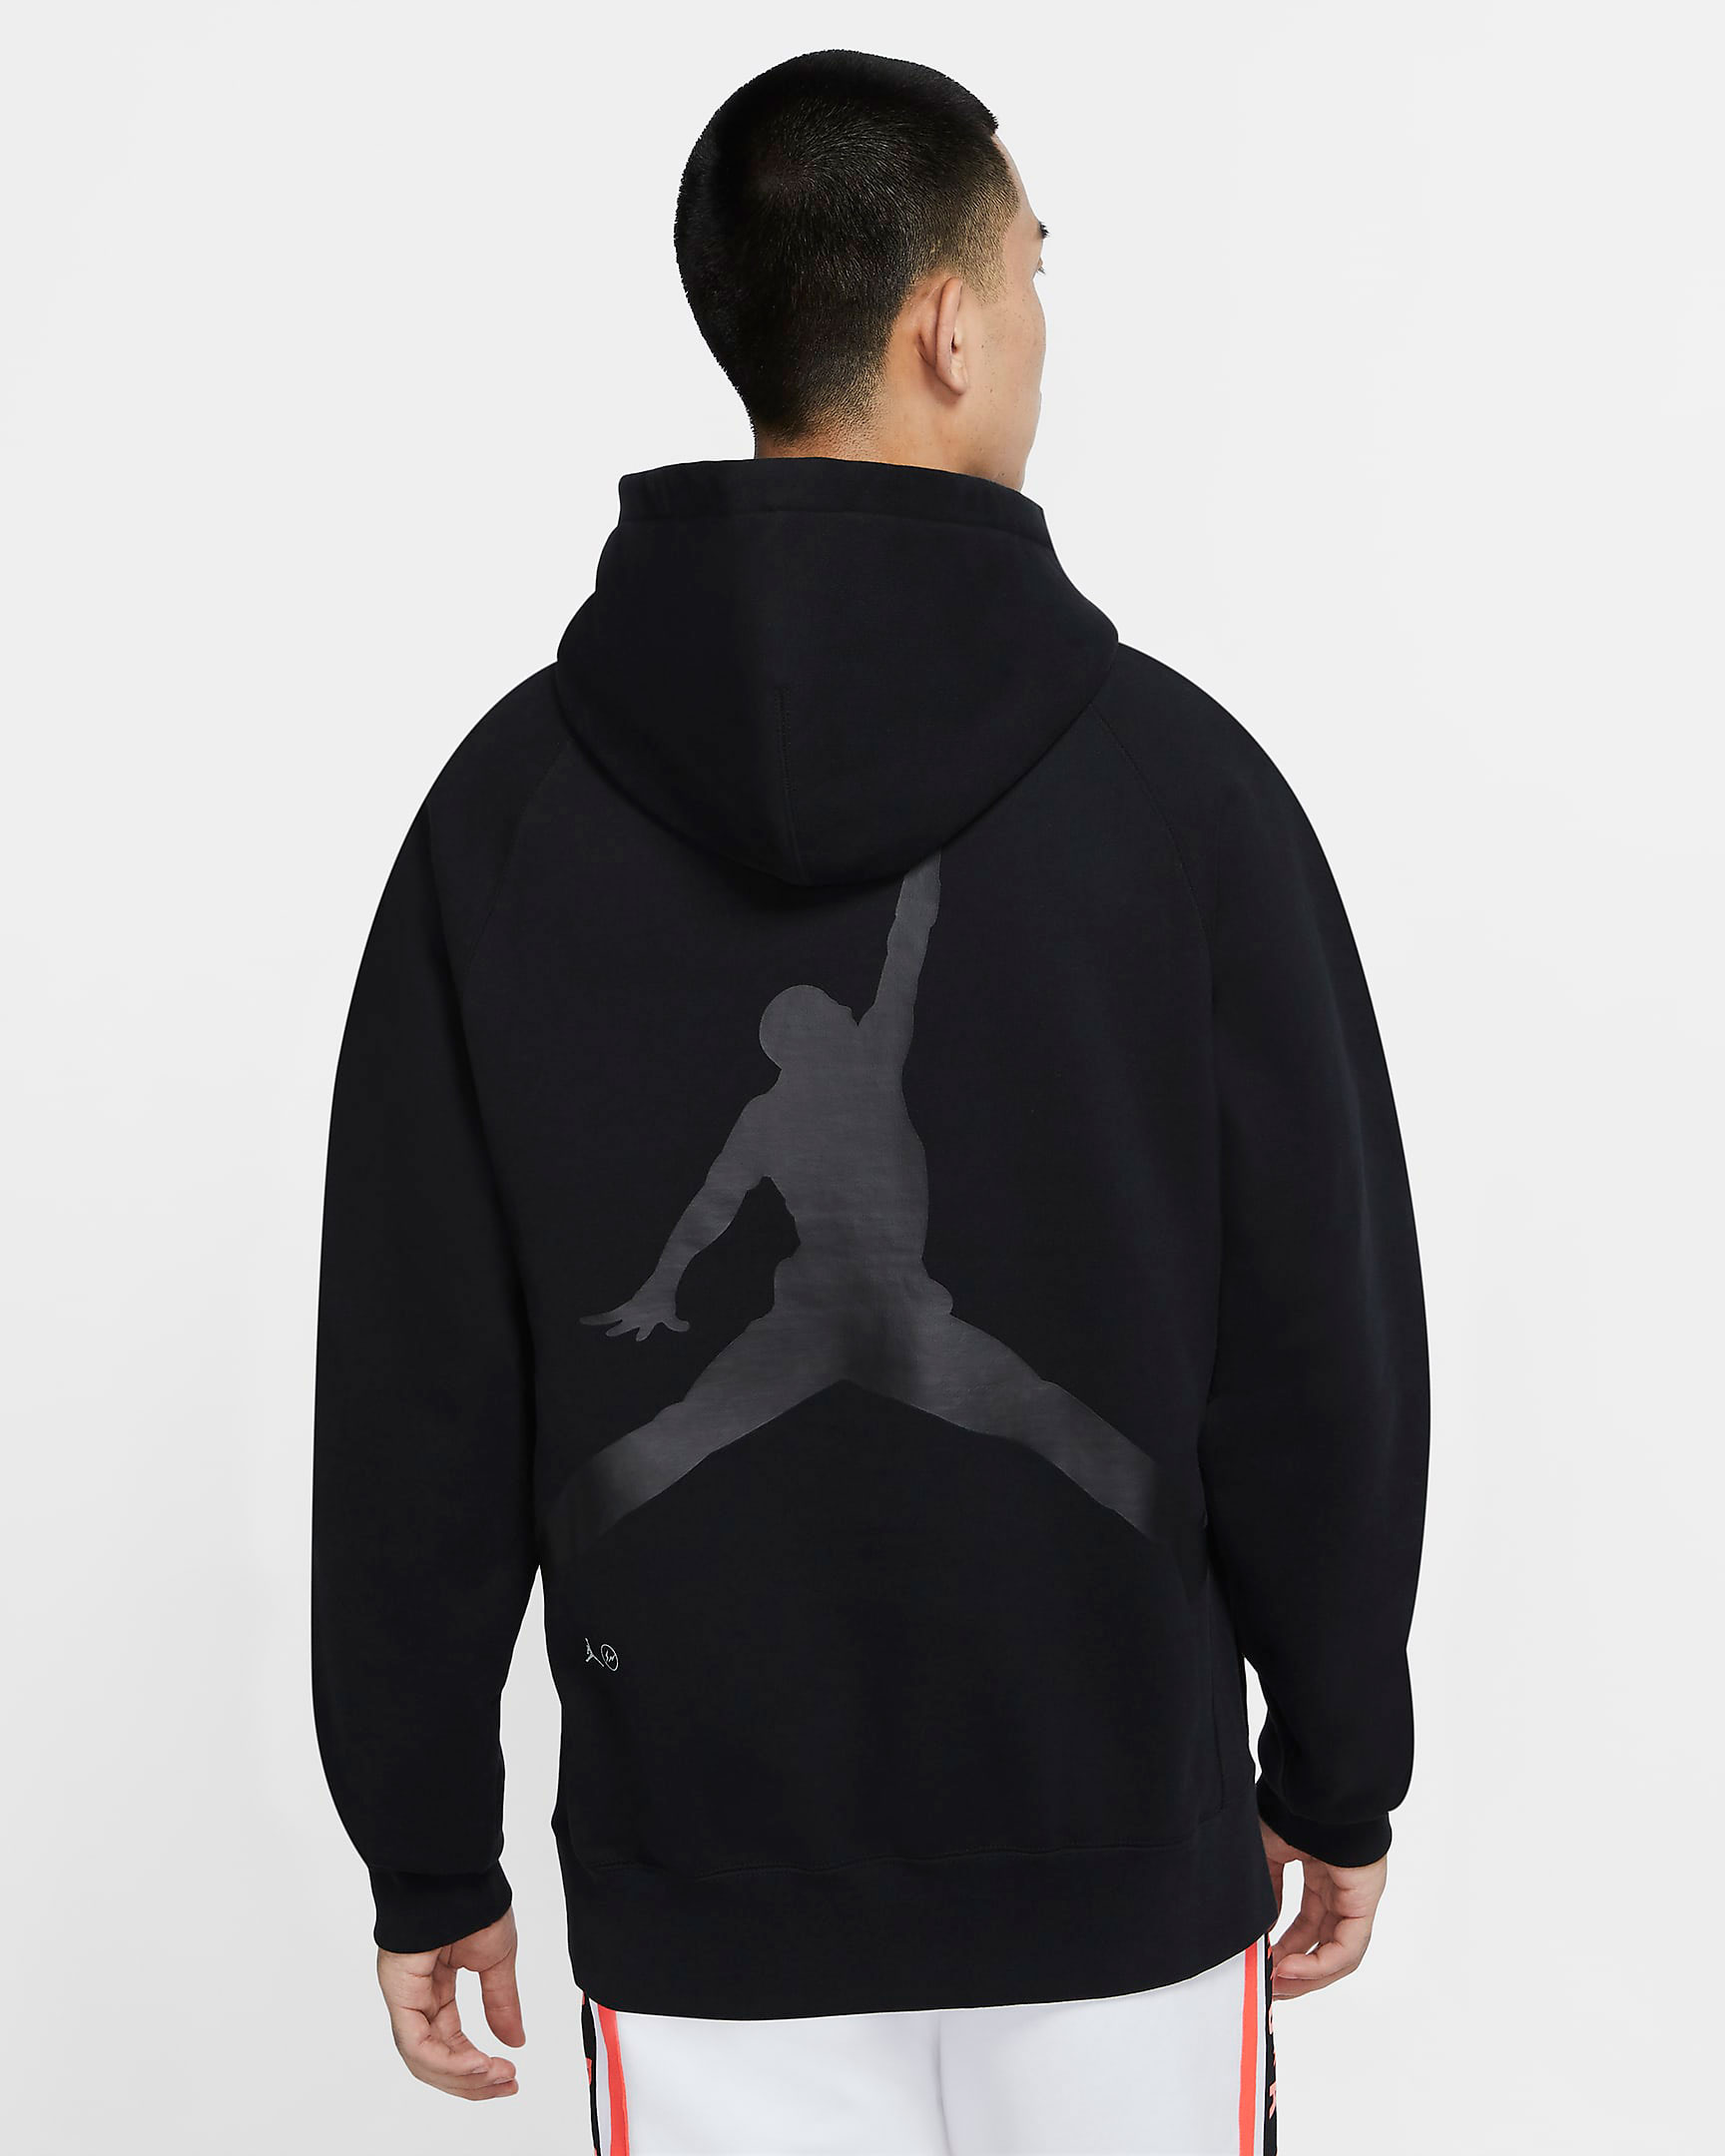 Air Jordan 35 Fragment Shirts and Clothing | SneakerFits.com